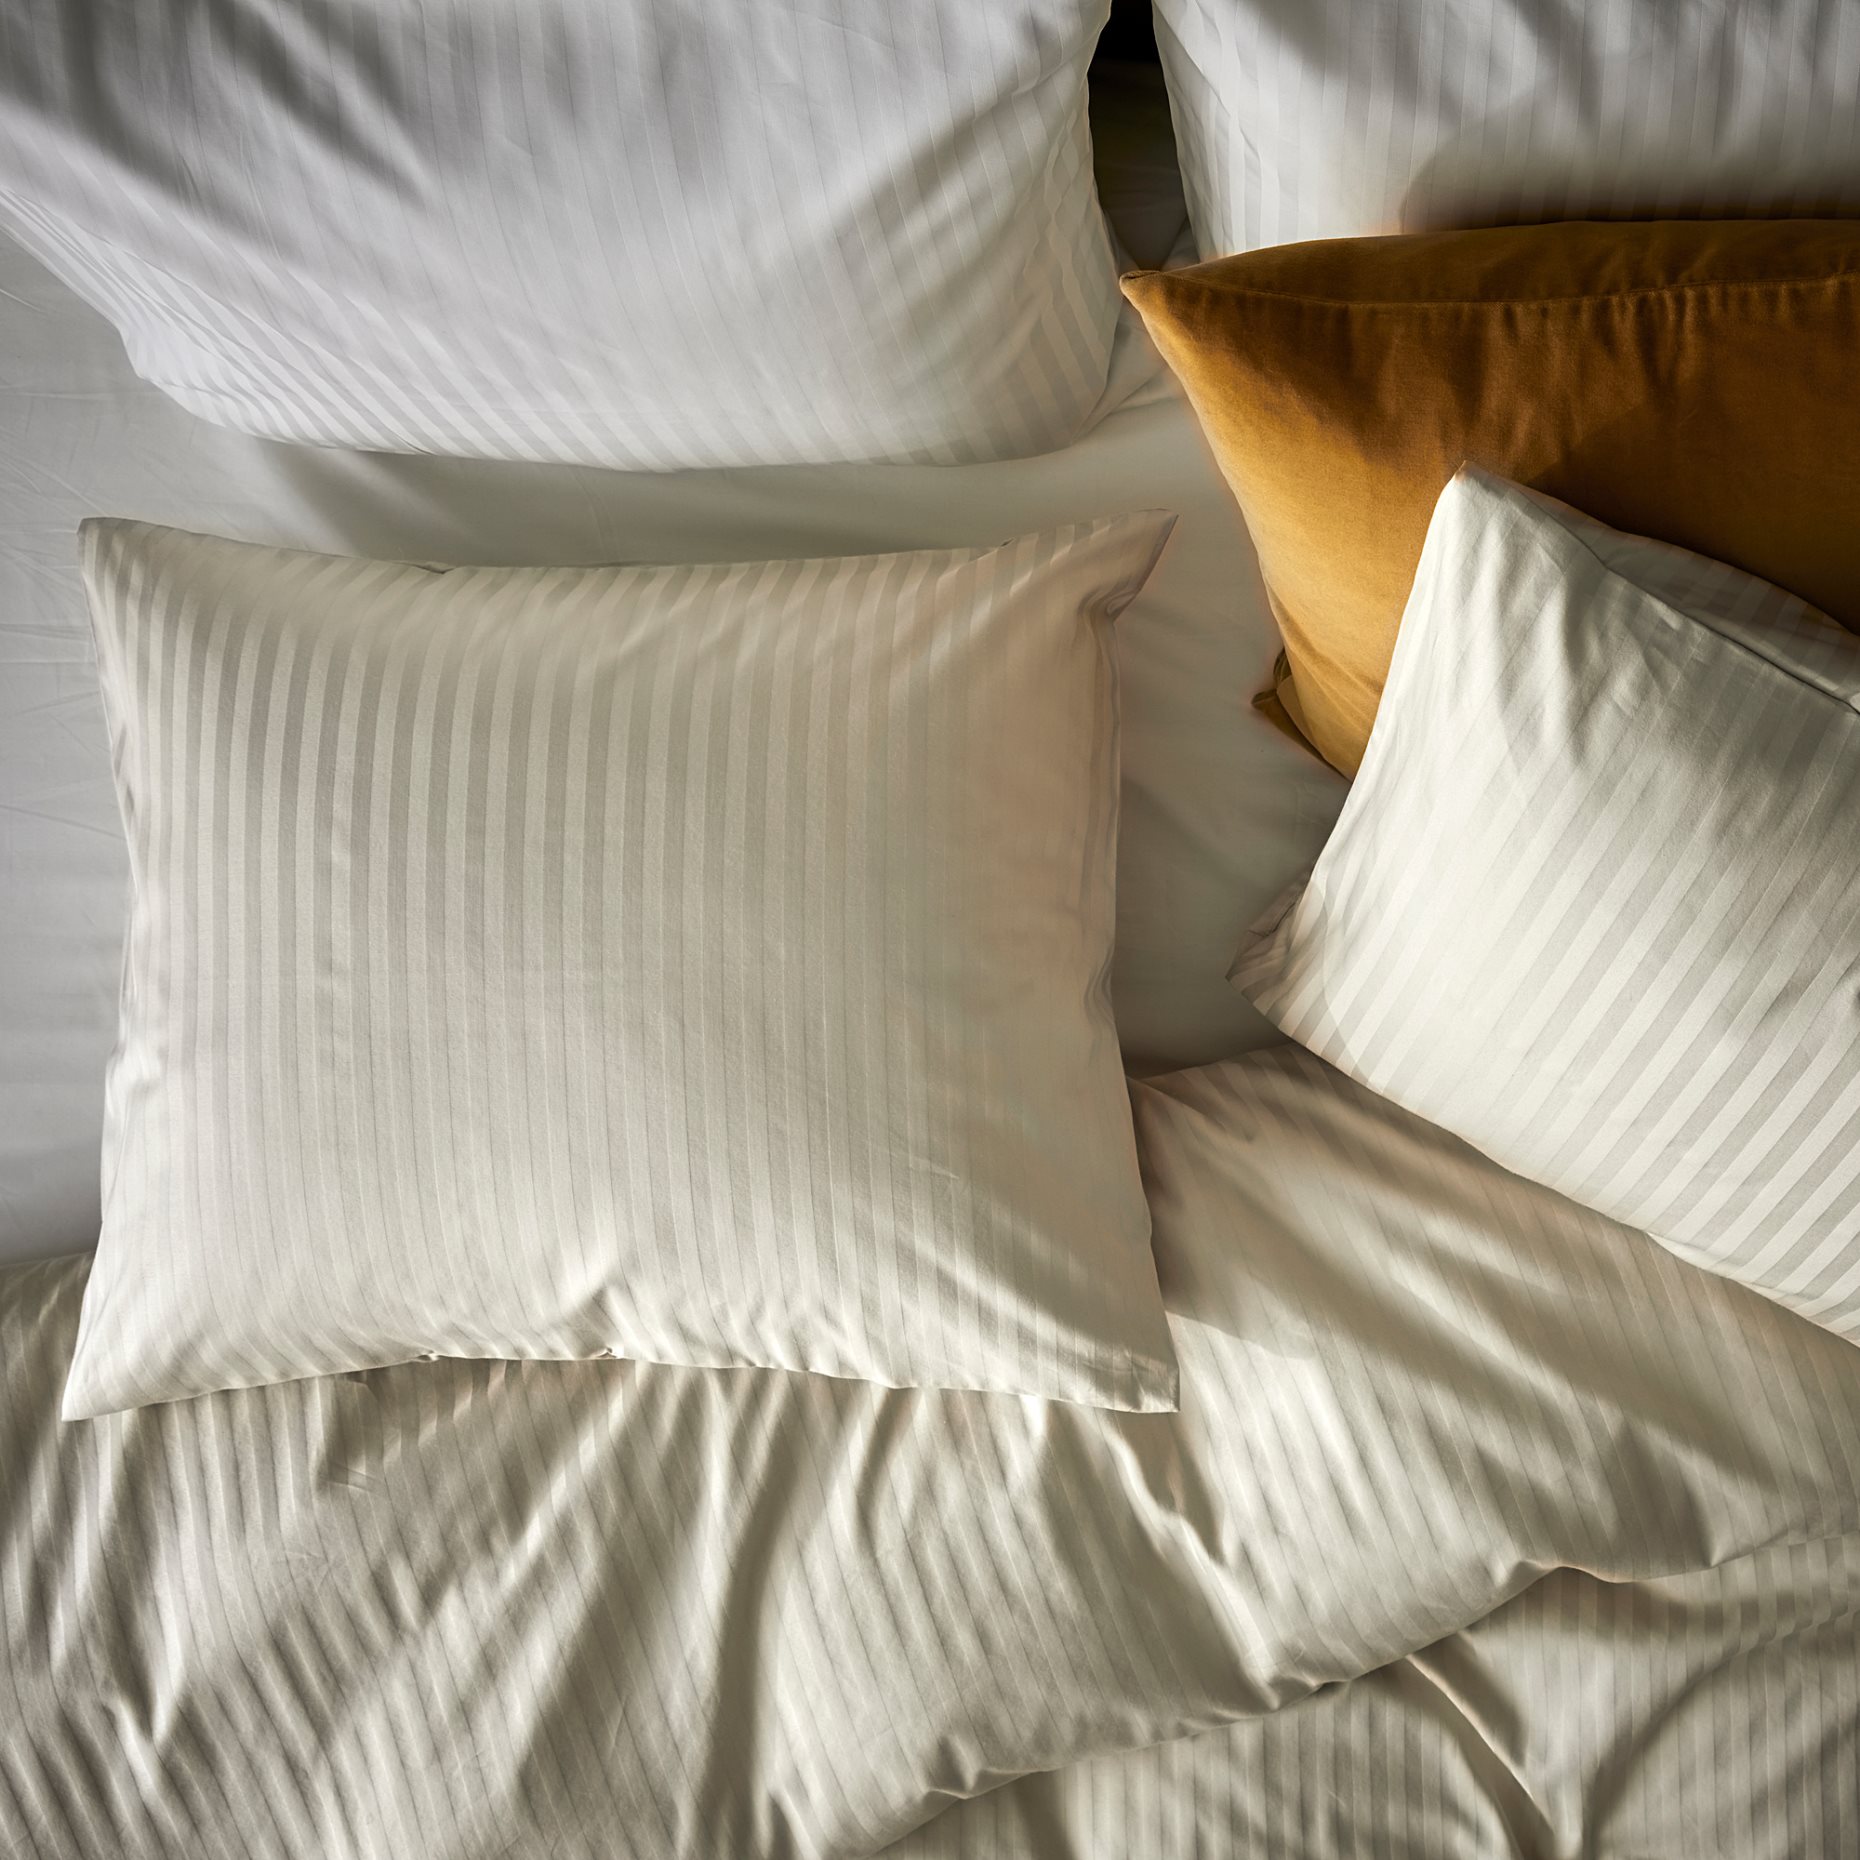 NATTJASMIN, quilt cover and pillowcase, 150x200/50x60 cm, 704.426.17